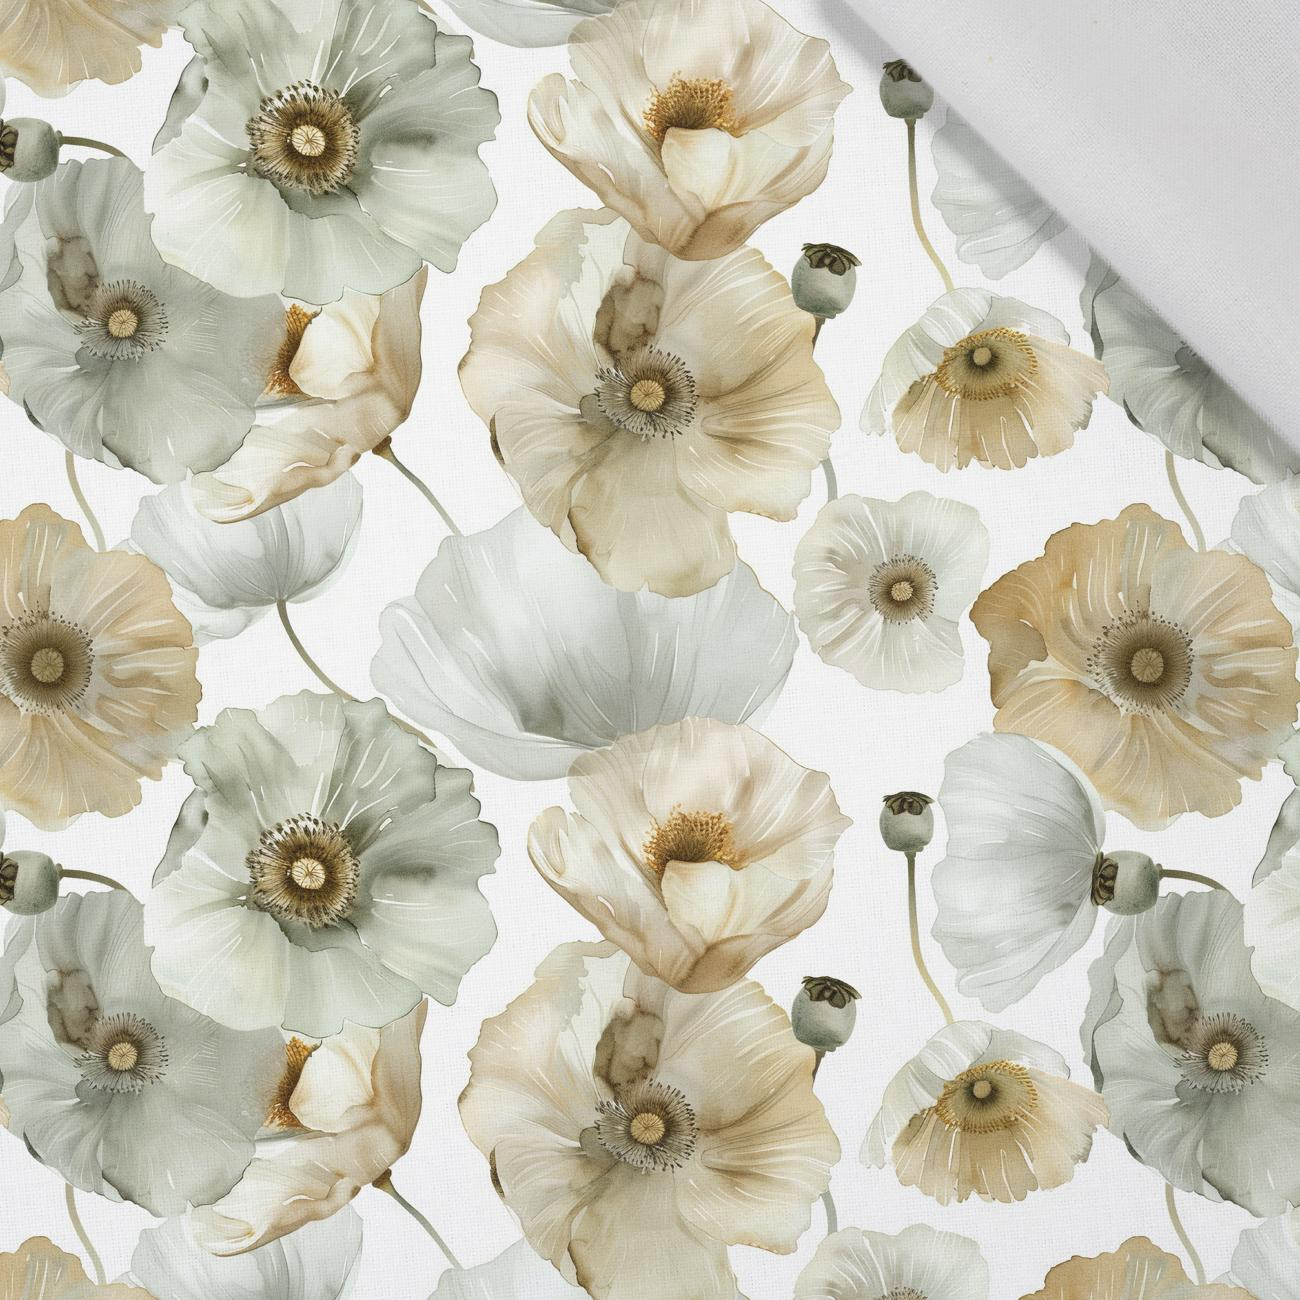 FLOWERS wz.18 - PERKAL Cotton fabric